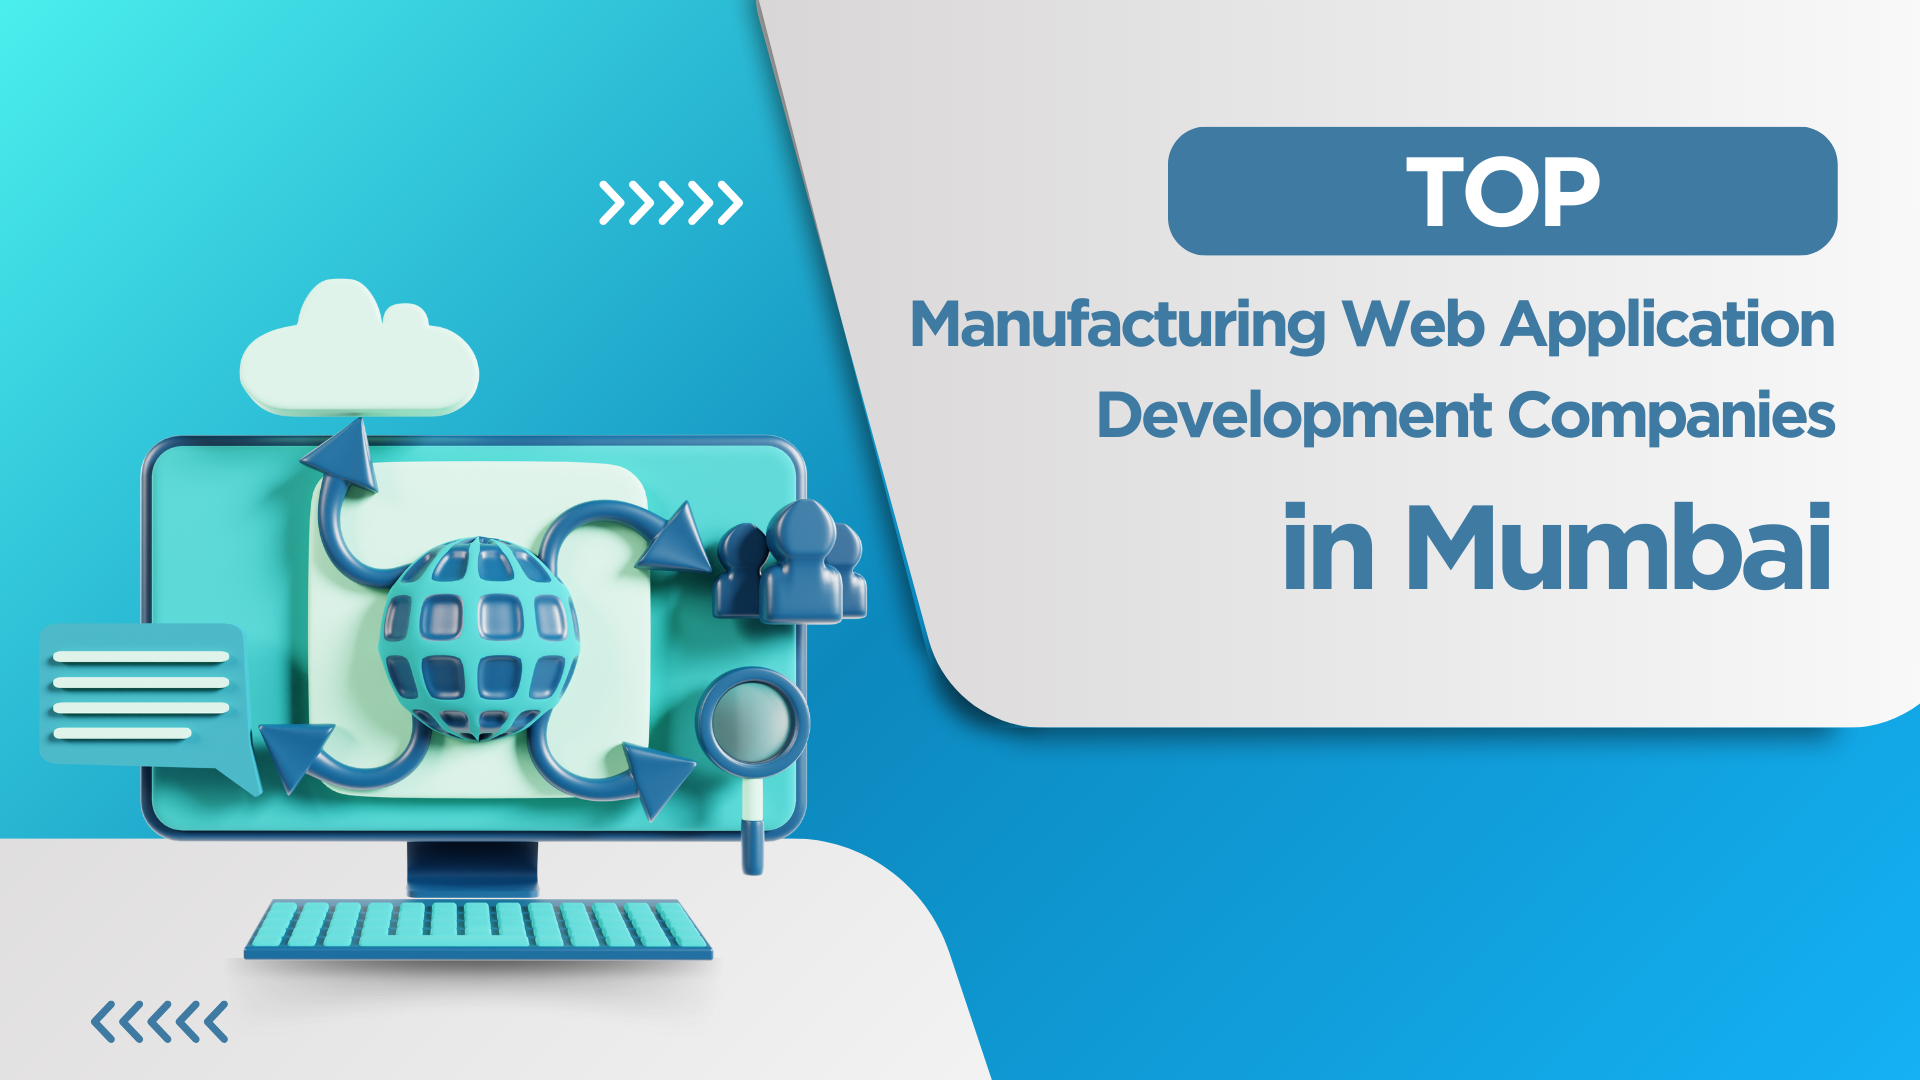 Manufacturing web application development companies